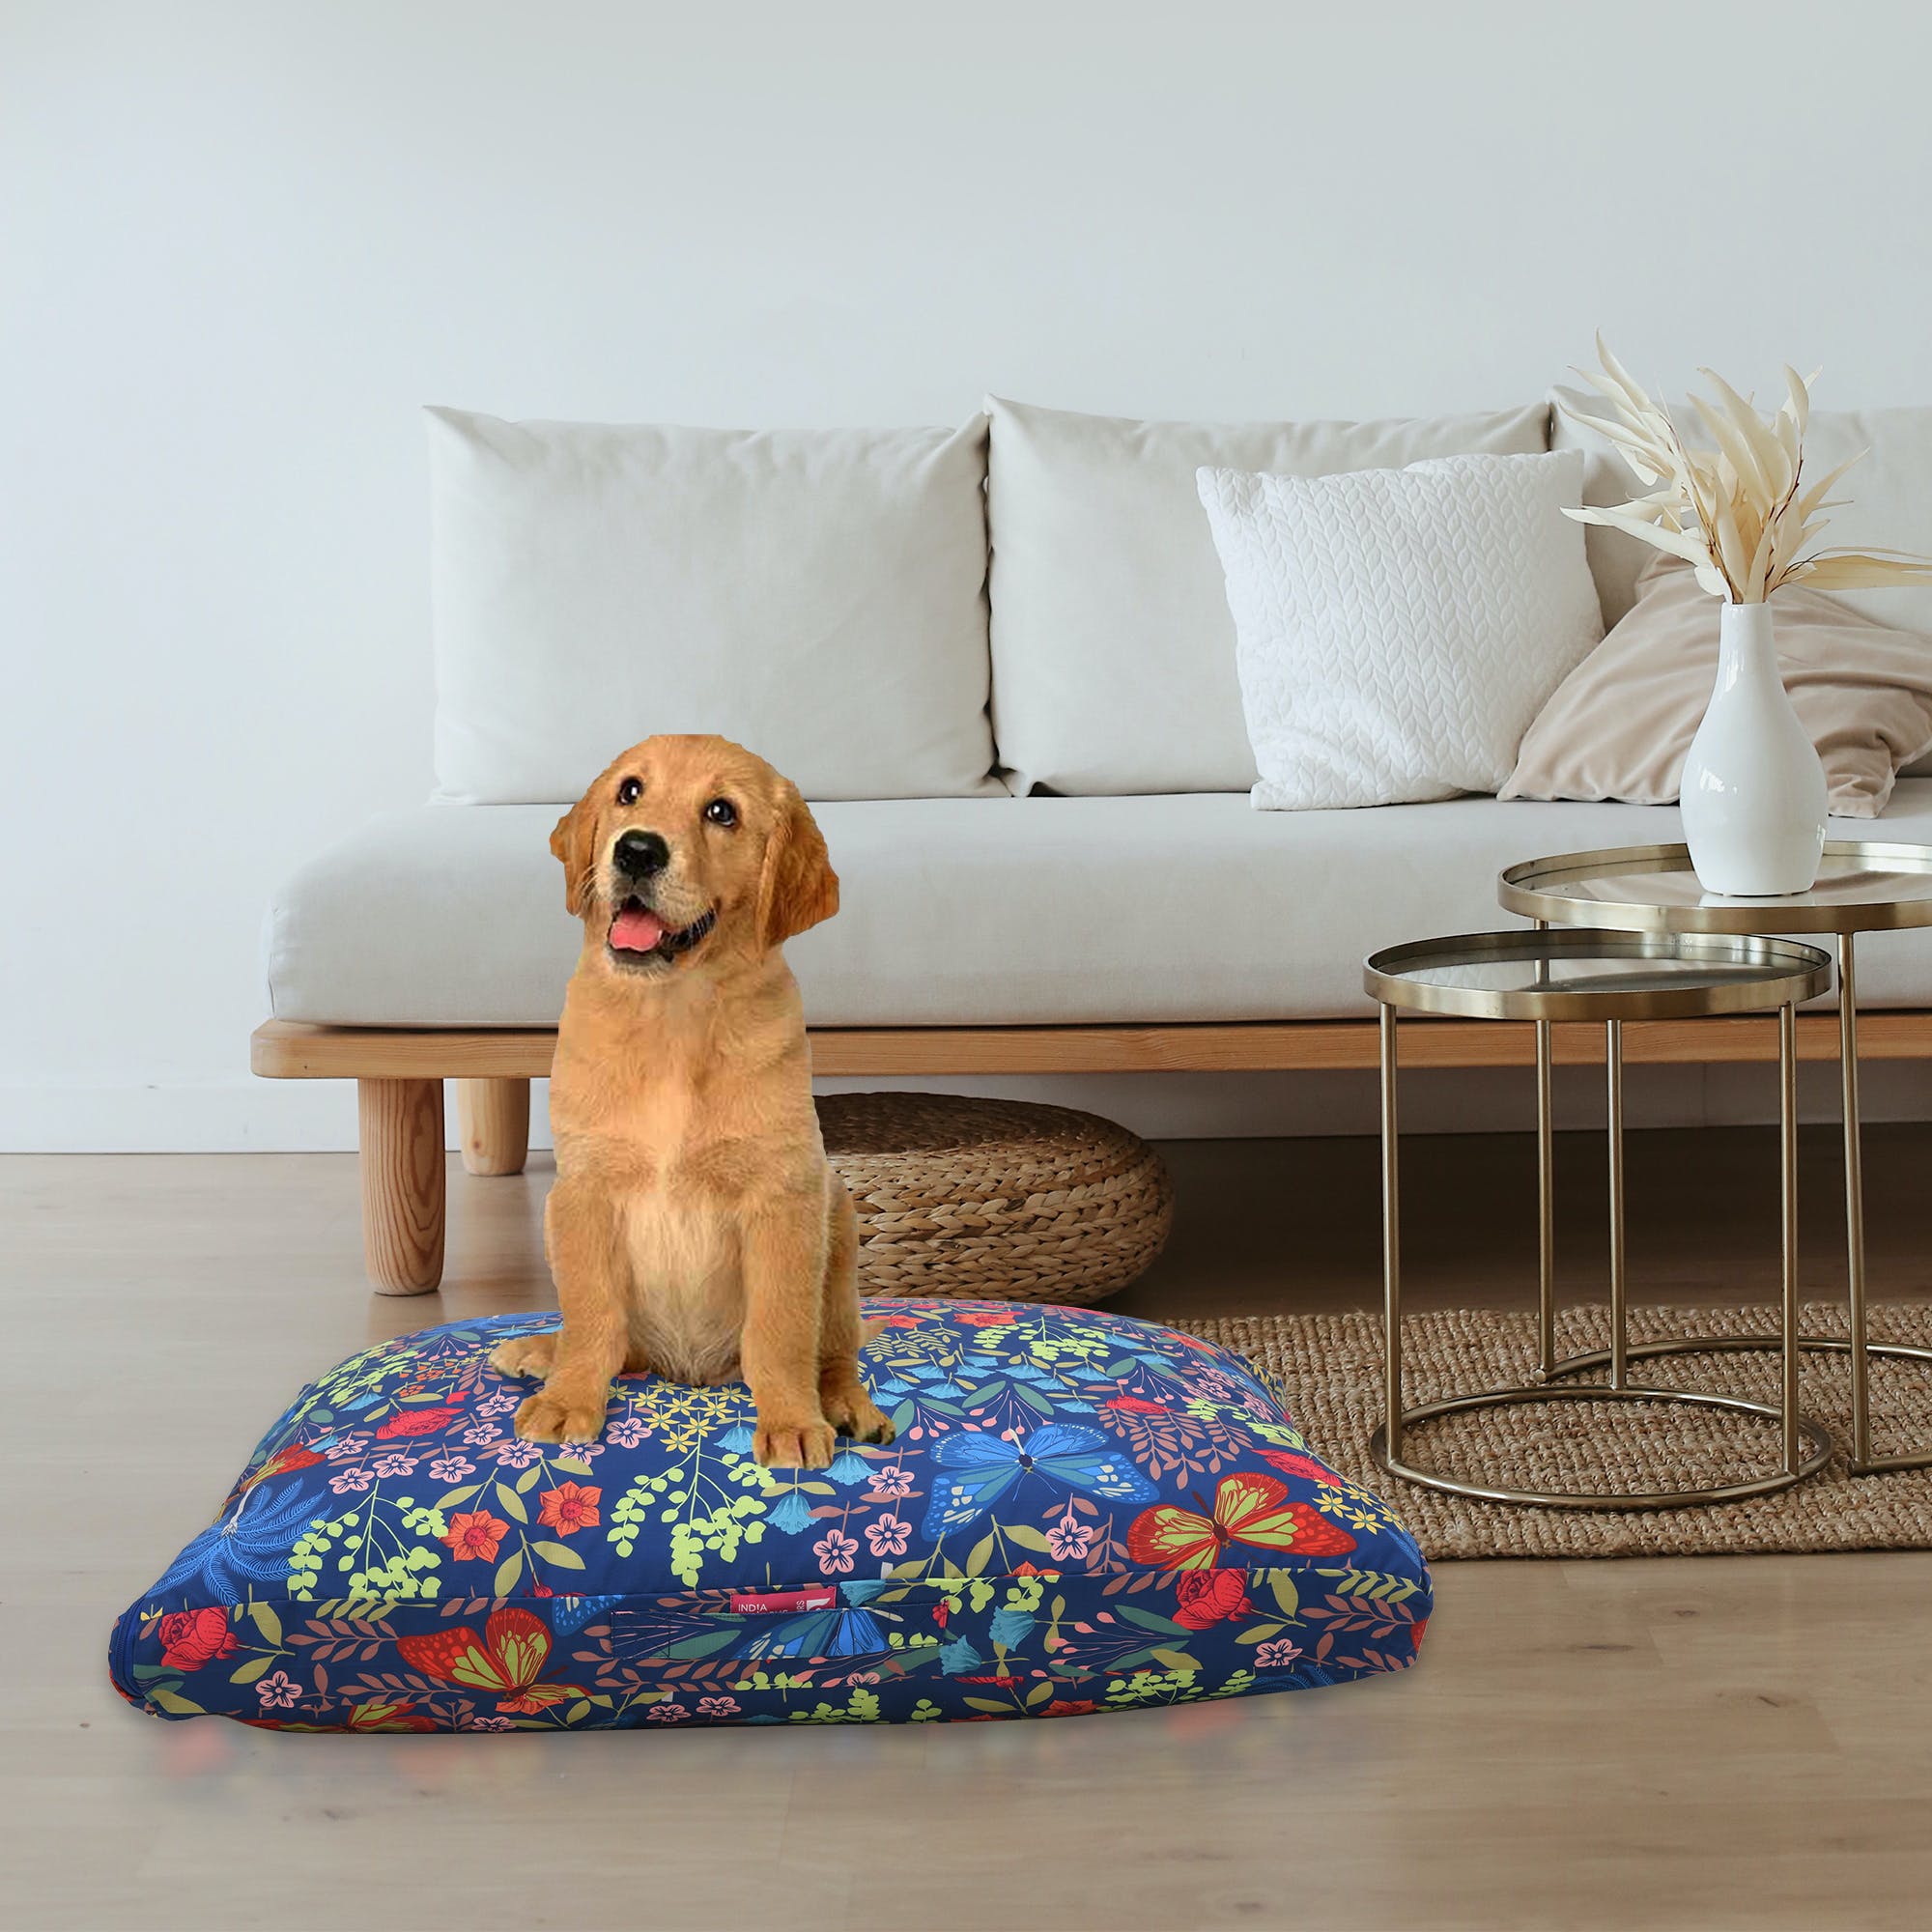 Dog breed,Carnivore,Dog,Room,Furniture,Couch,Interior design,Floor,Flooring,Dog supply